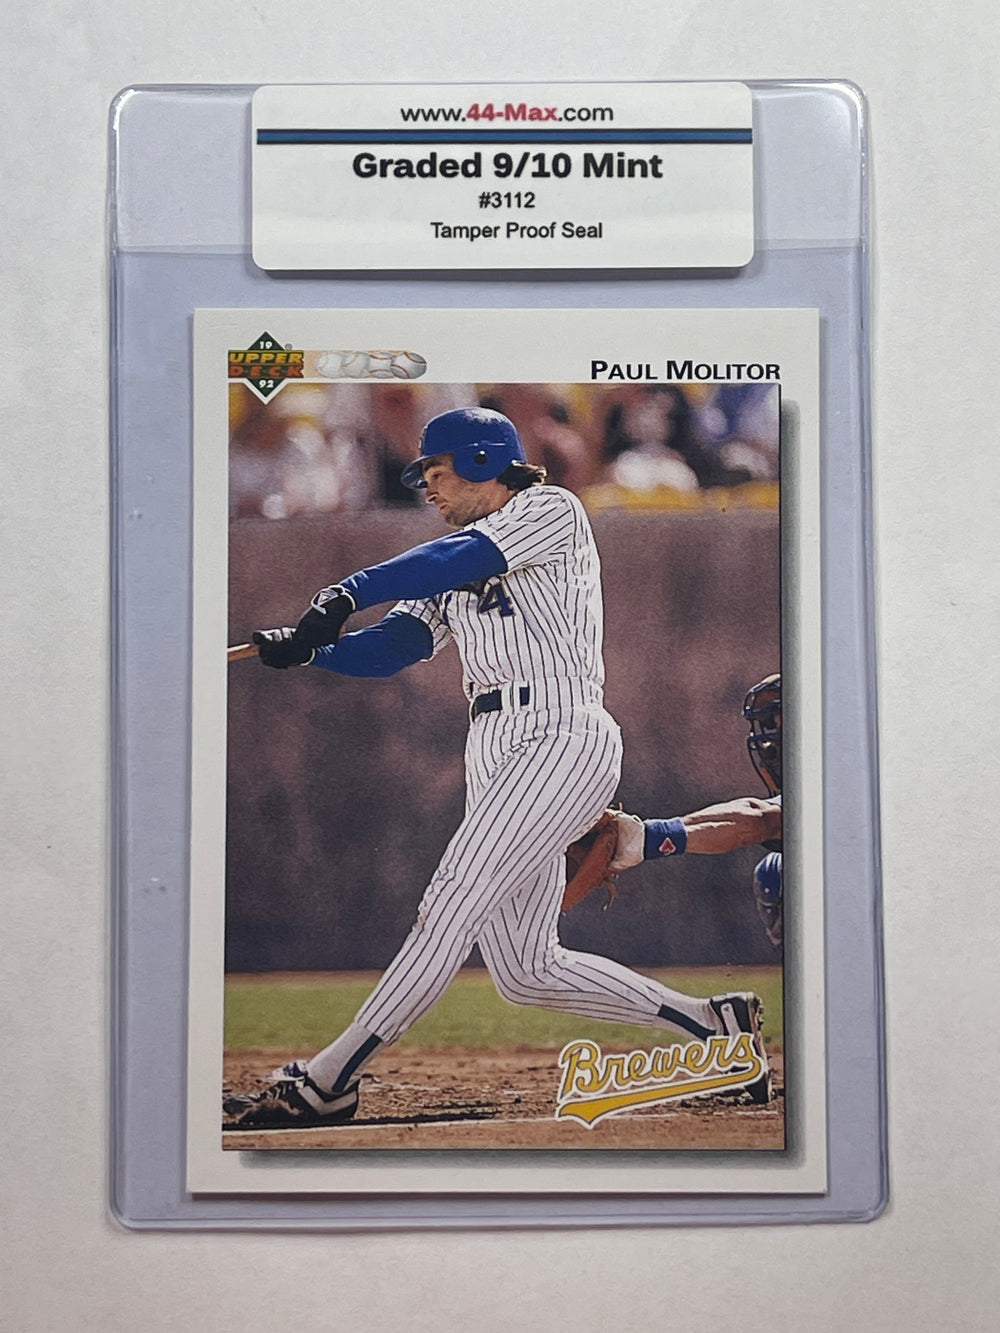 Paul Molitor 1992 Upper Deck Baseball Card. 44-Max 9/10 MINT #3112